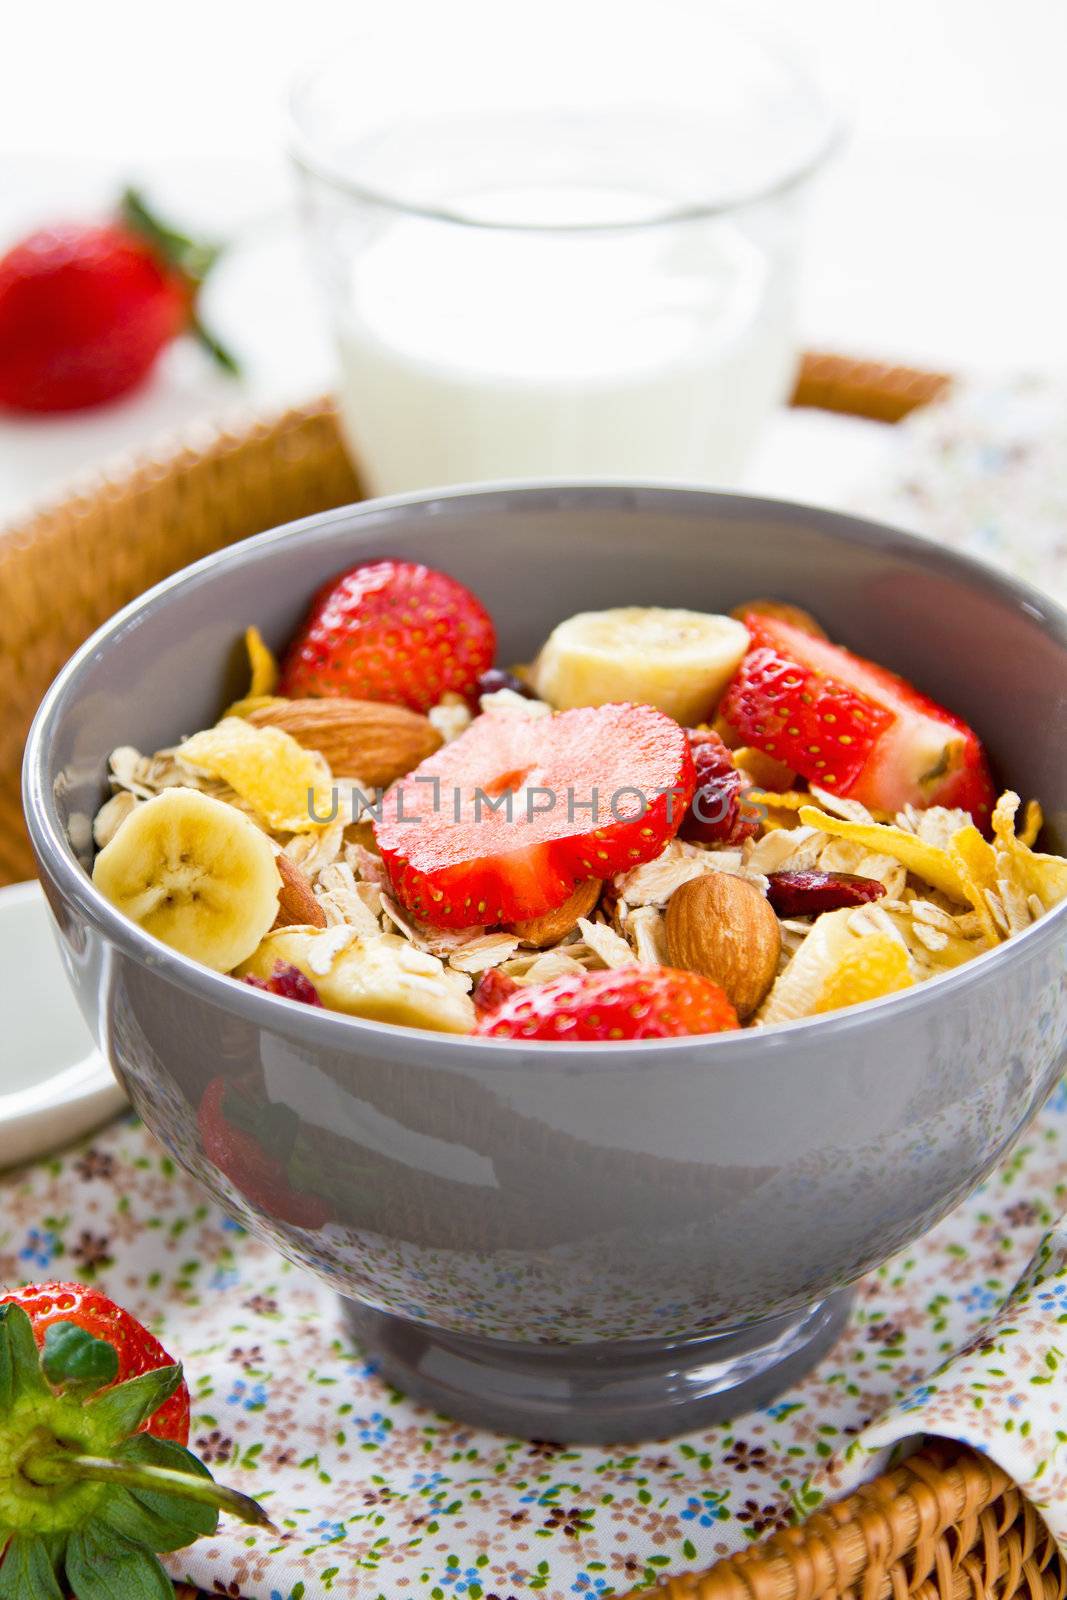 Muesli breakfast by vanillaechoes